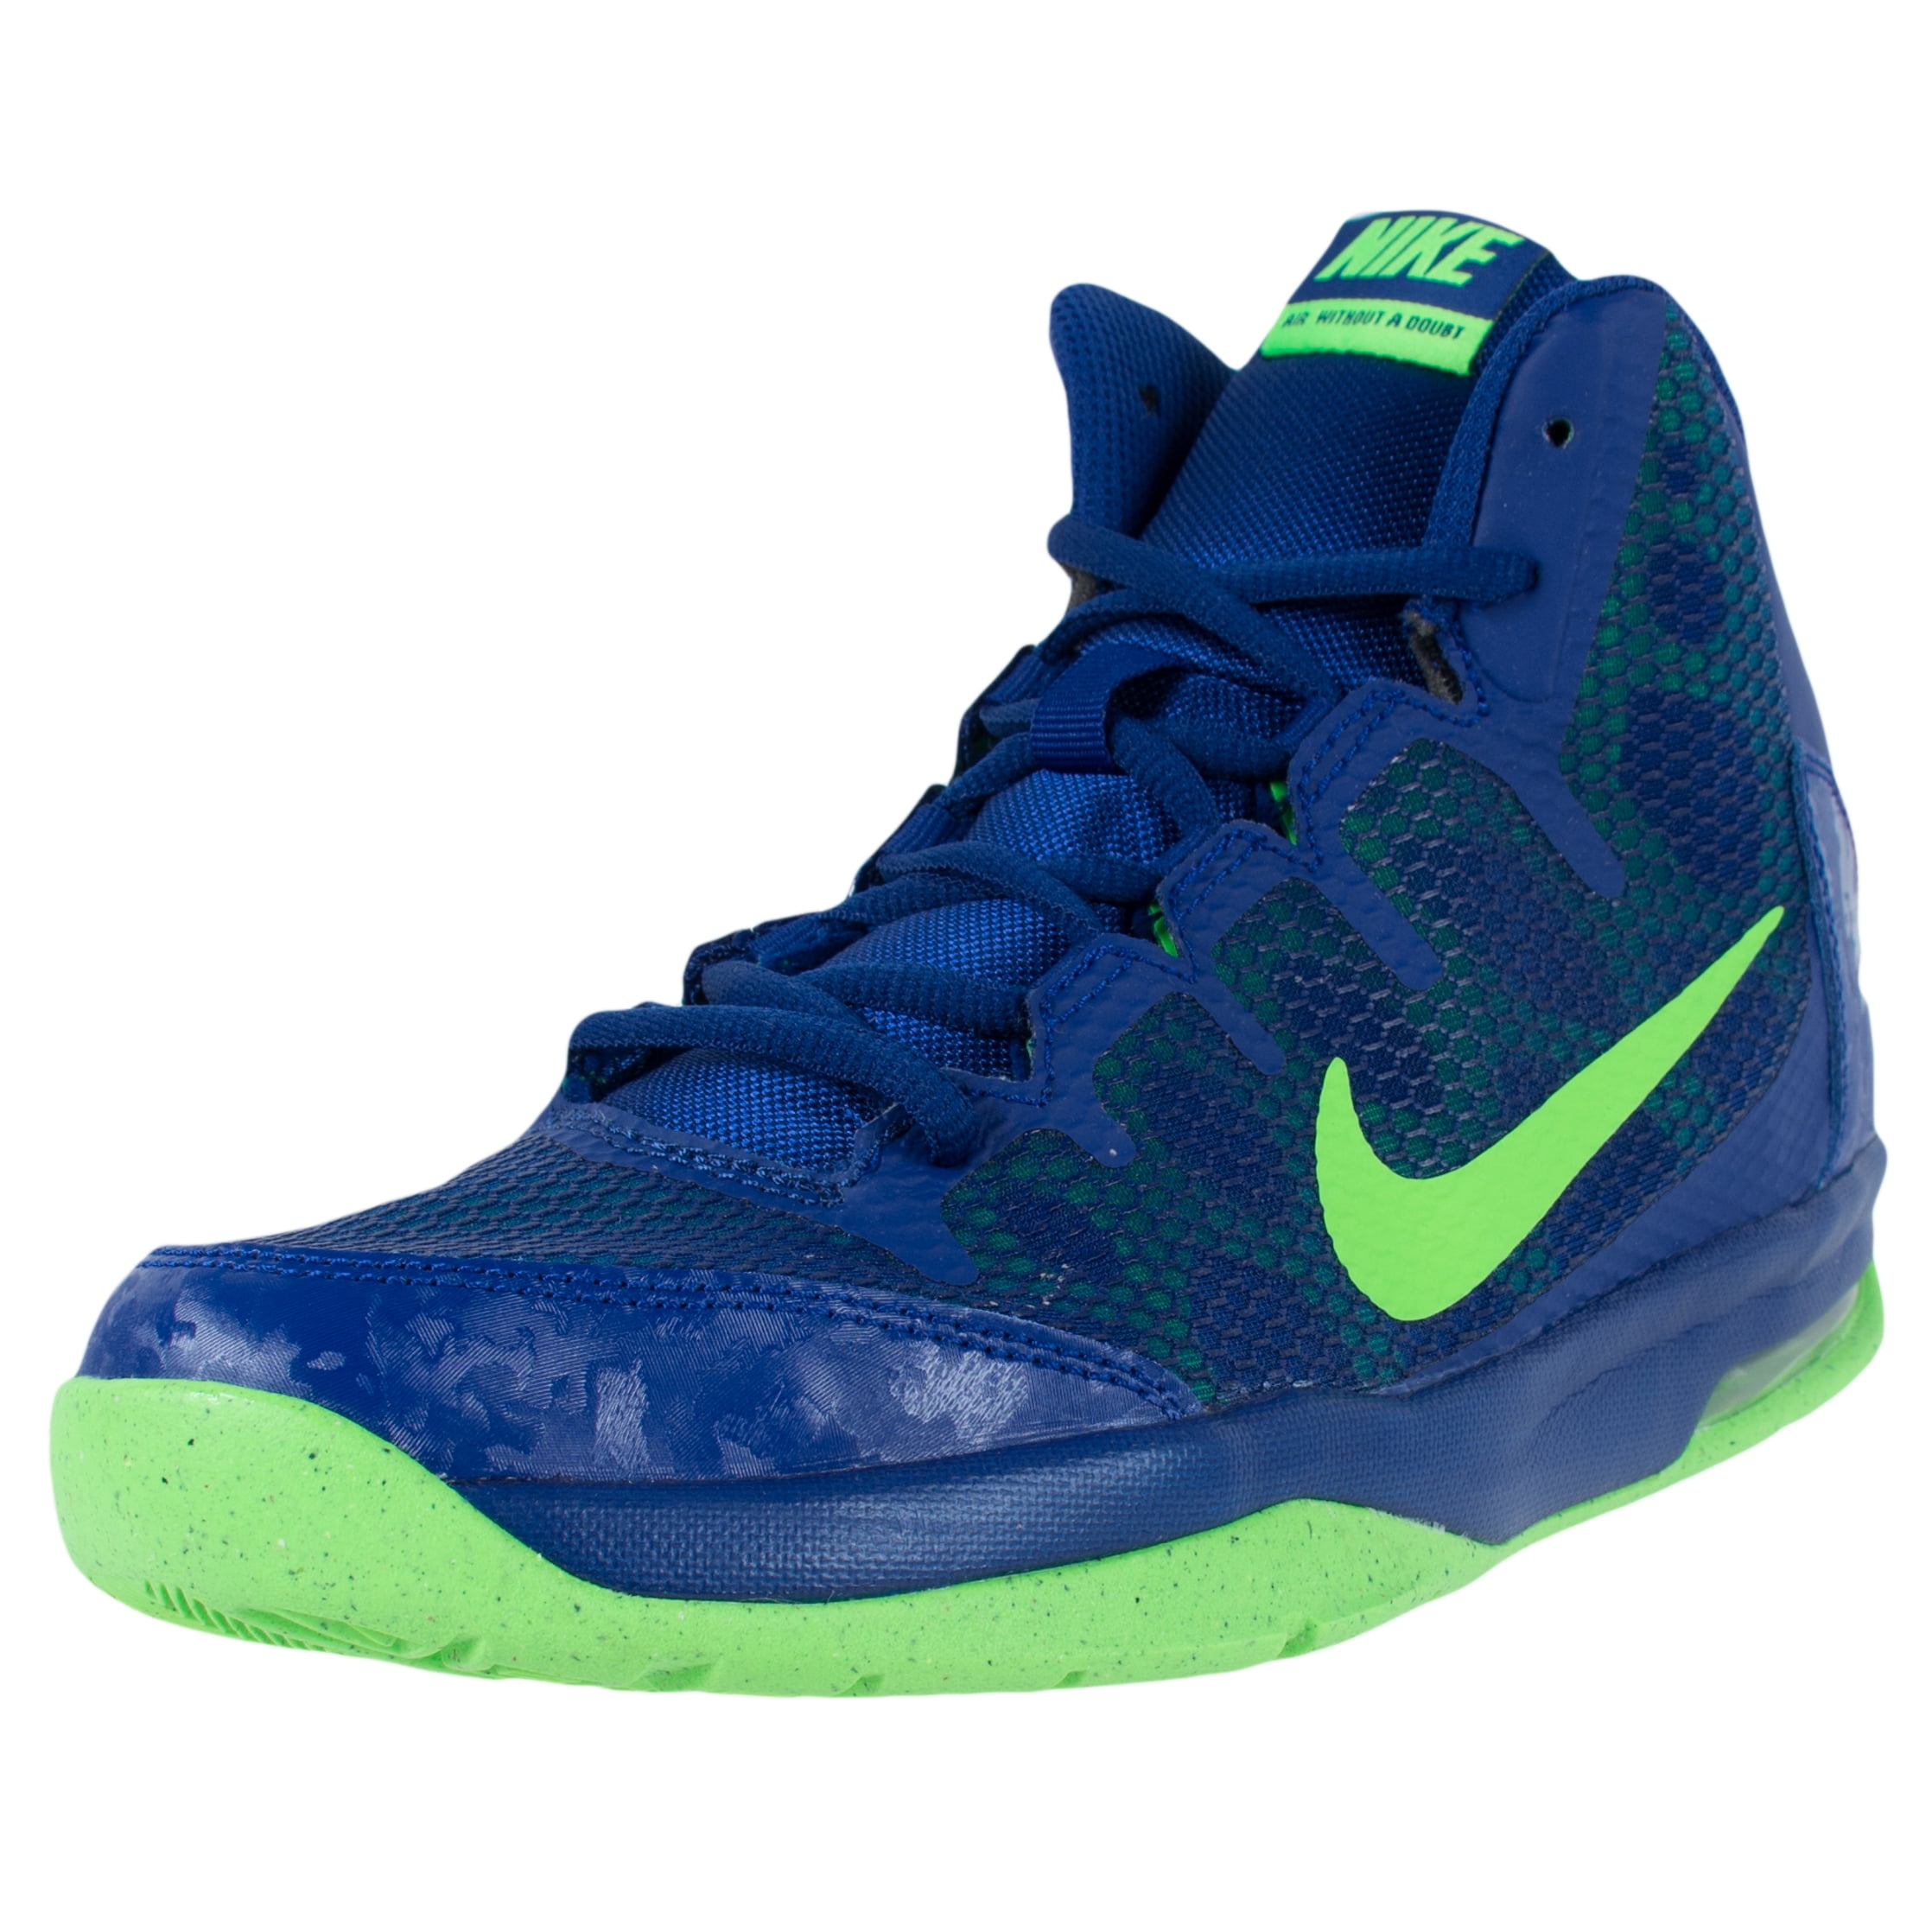 boys green basketball shoes